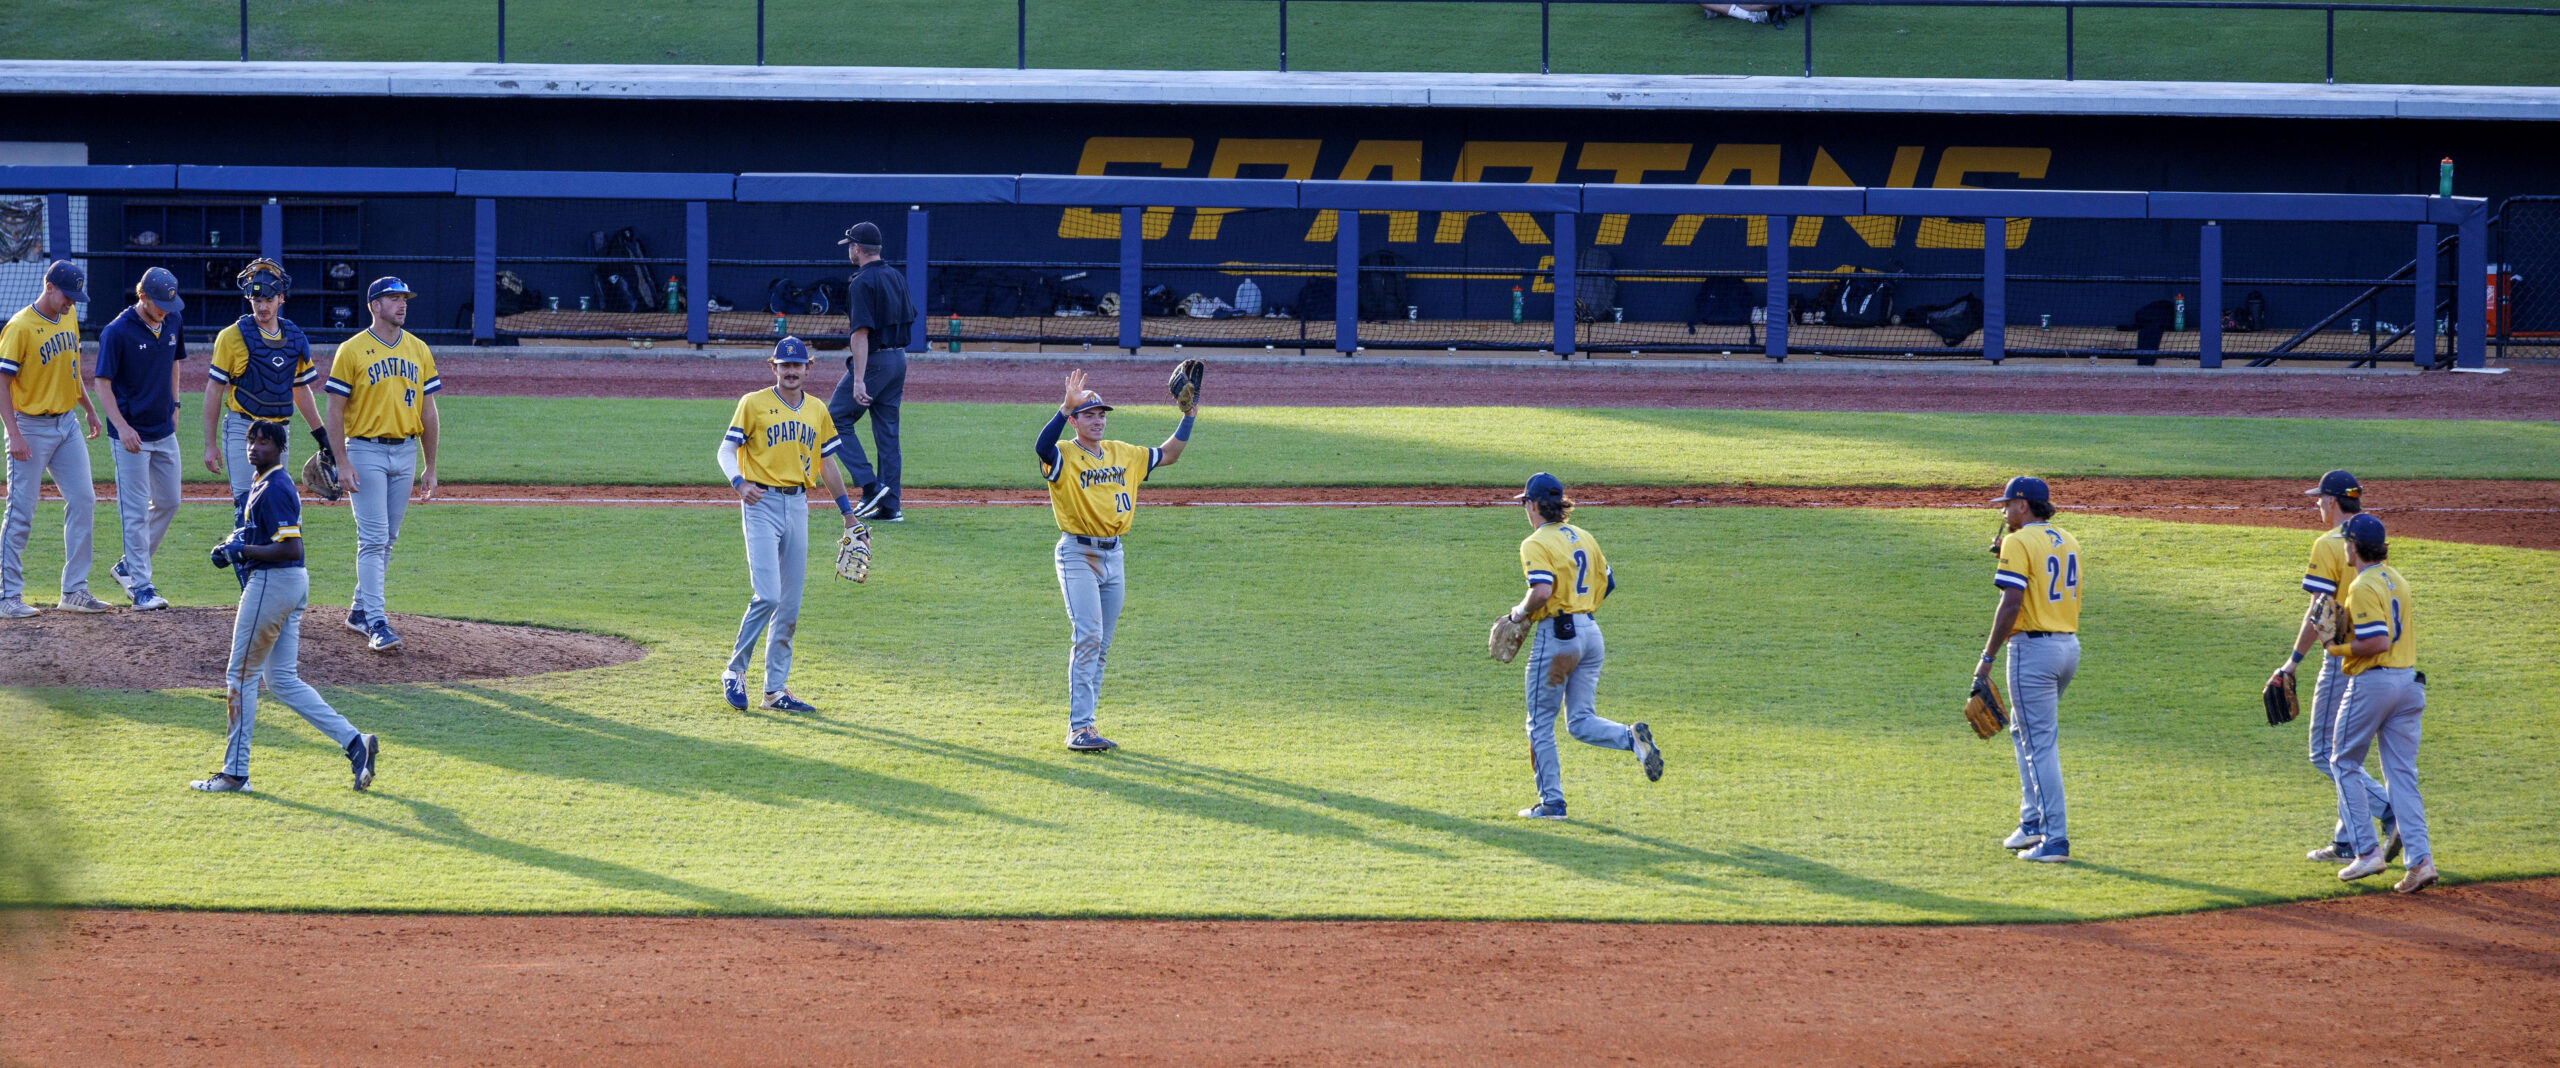 UNCG's baseball team plays on the field.